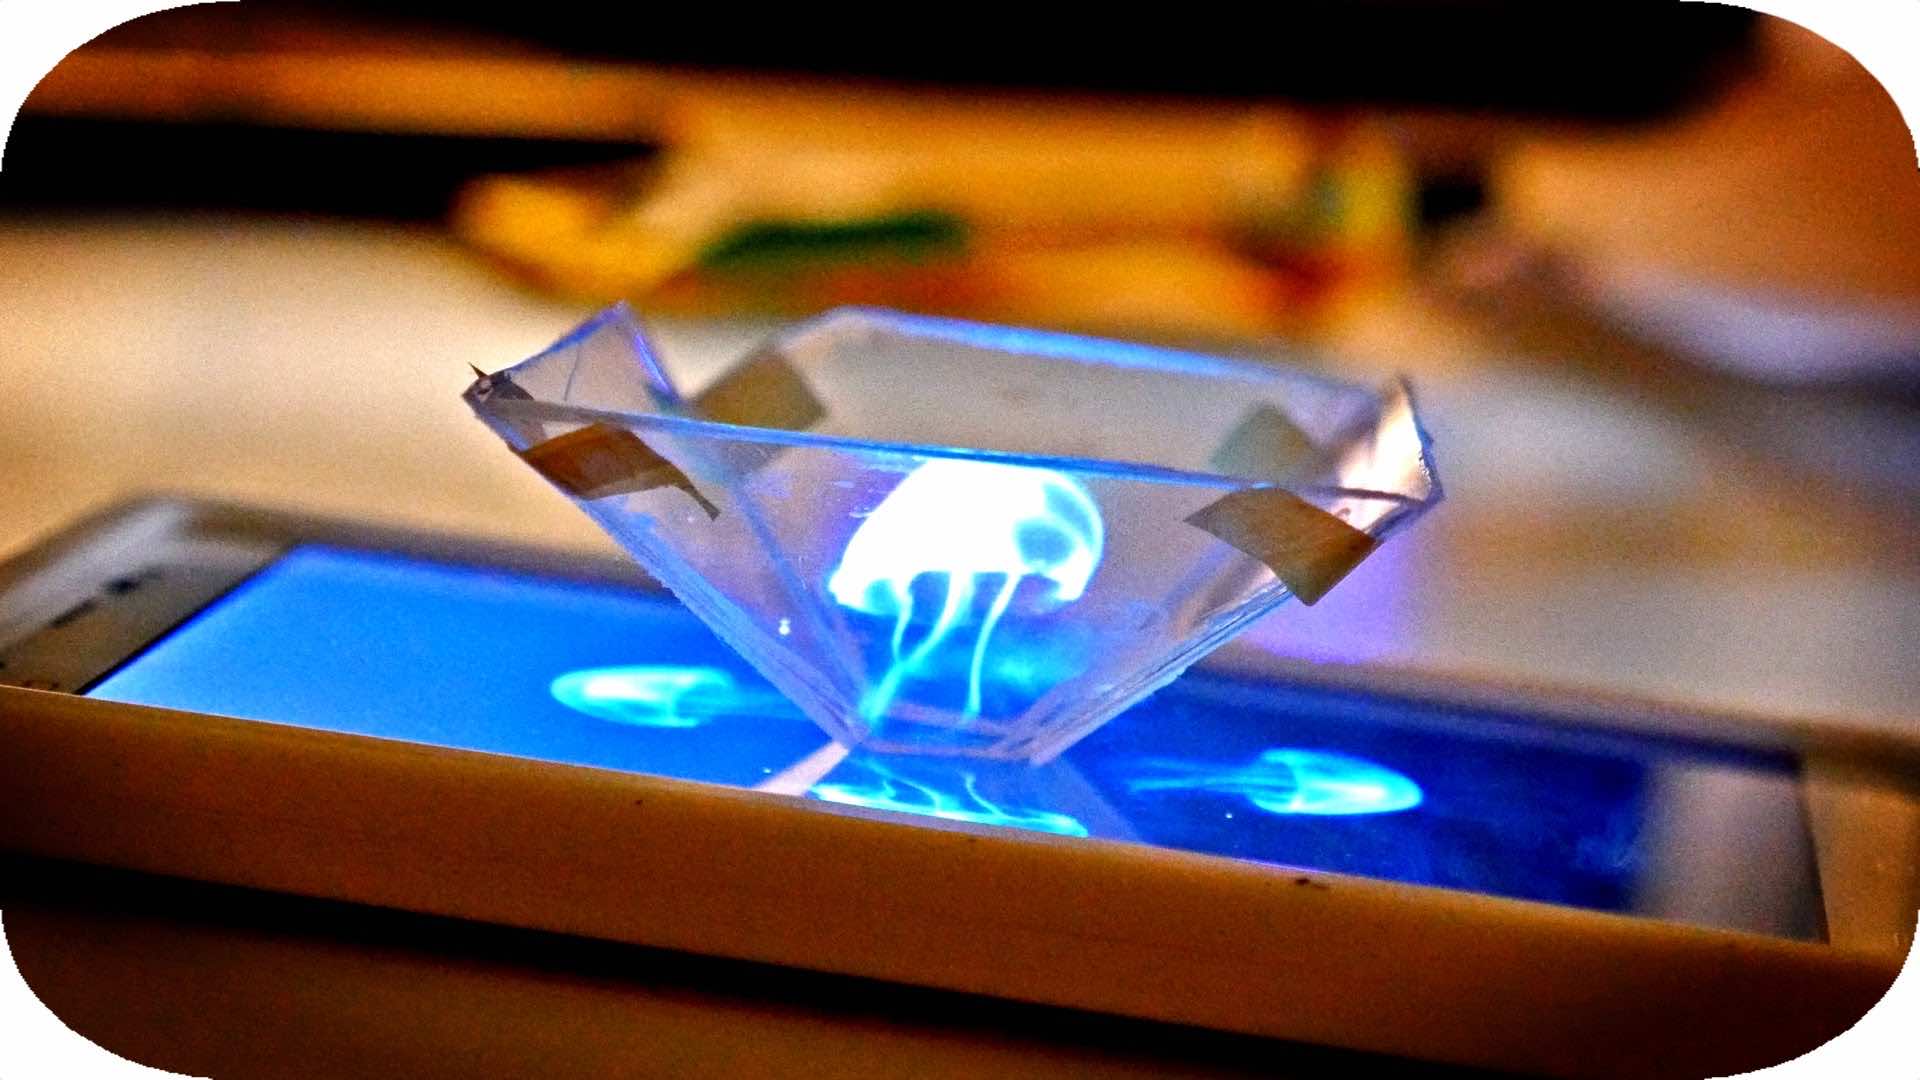 Video: Algún día el iPhone proyectará hologramas así.